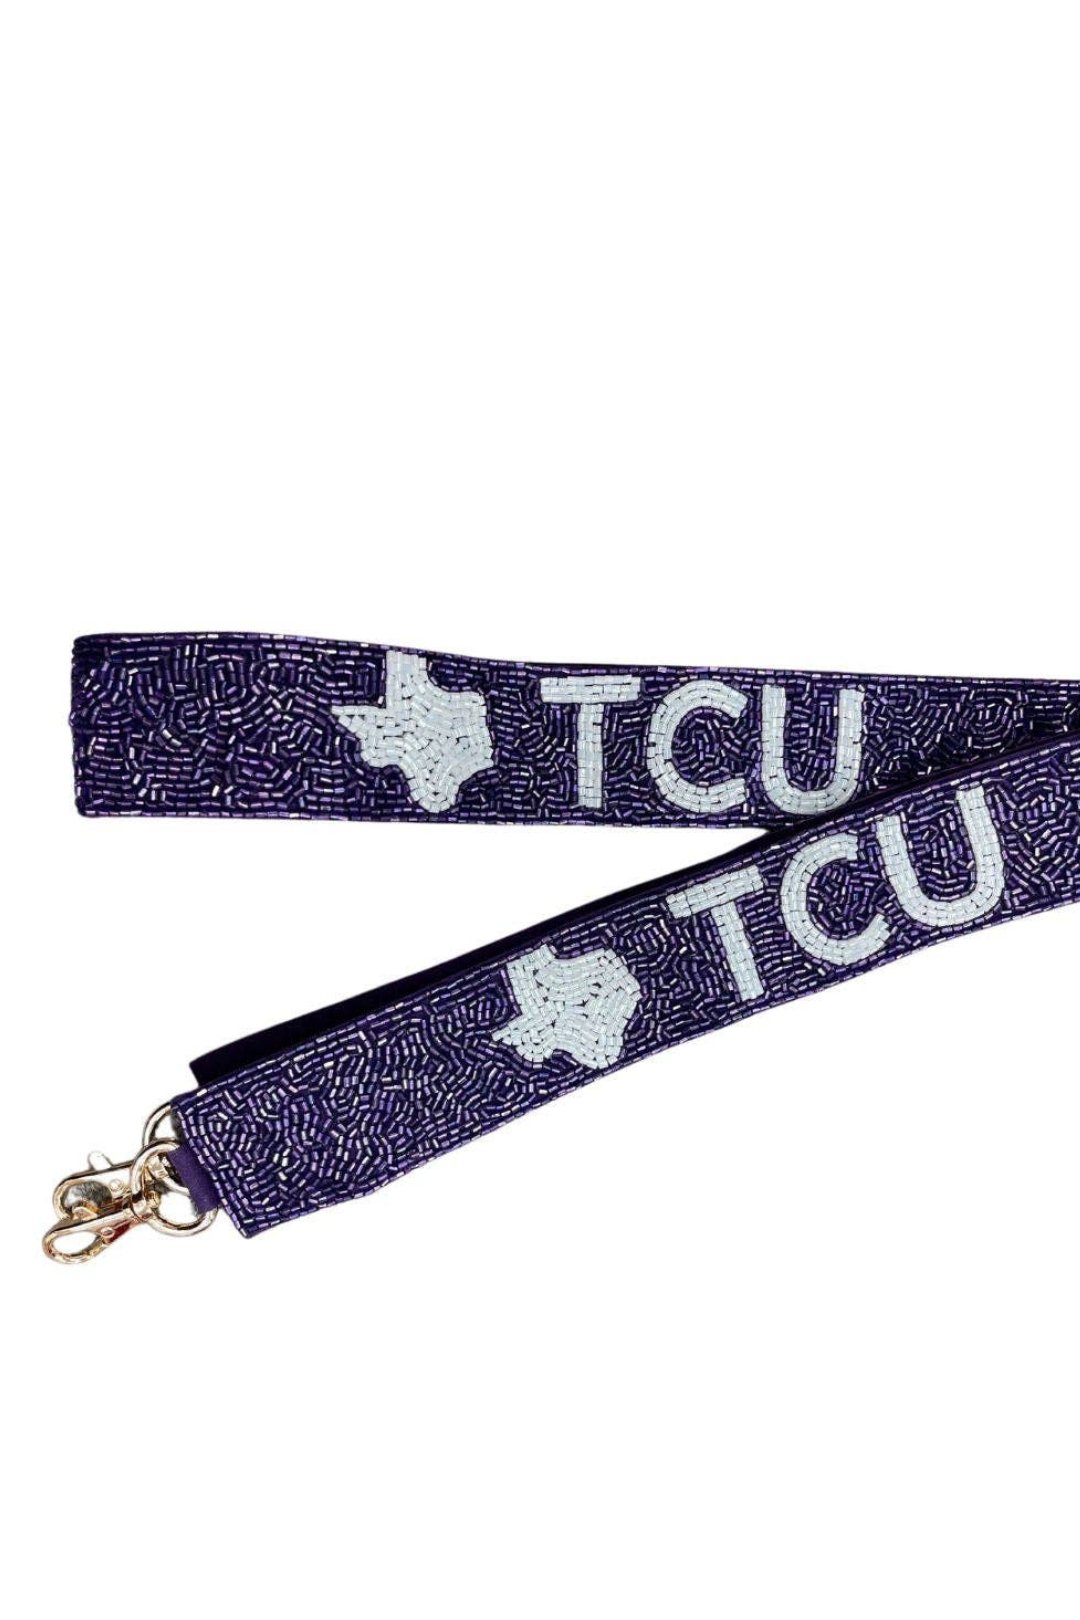 Purple + White TCU Texas Beaded Bag Strap - Treasure Jewels Inc. - Color Game